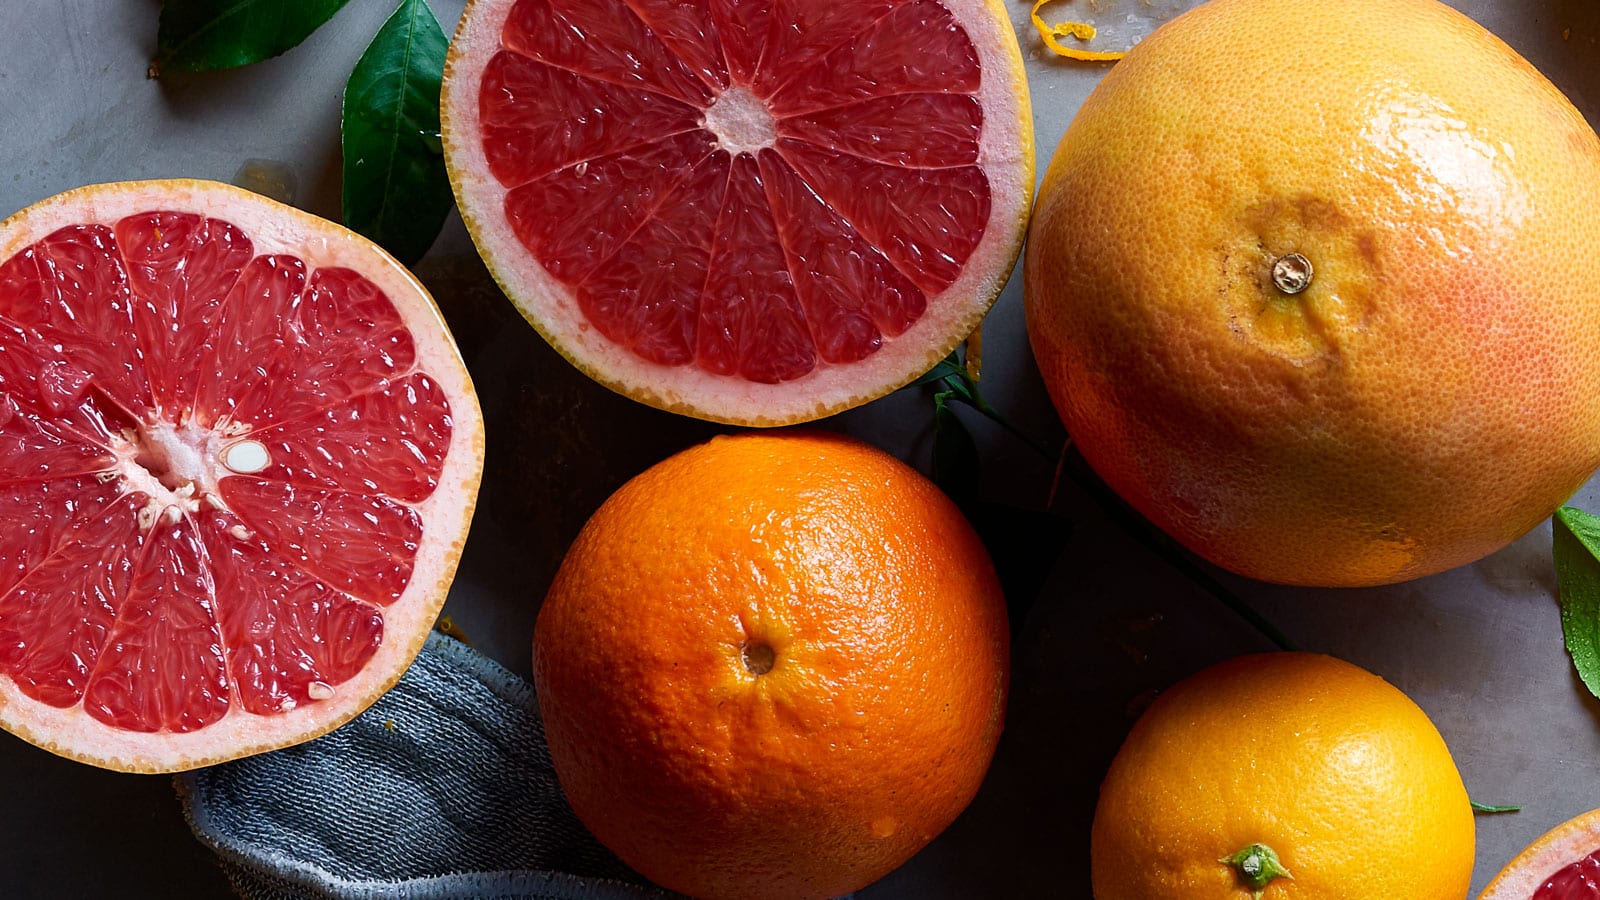 grapefruit oranges and lemons